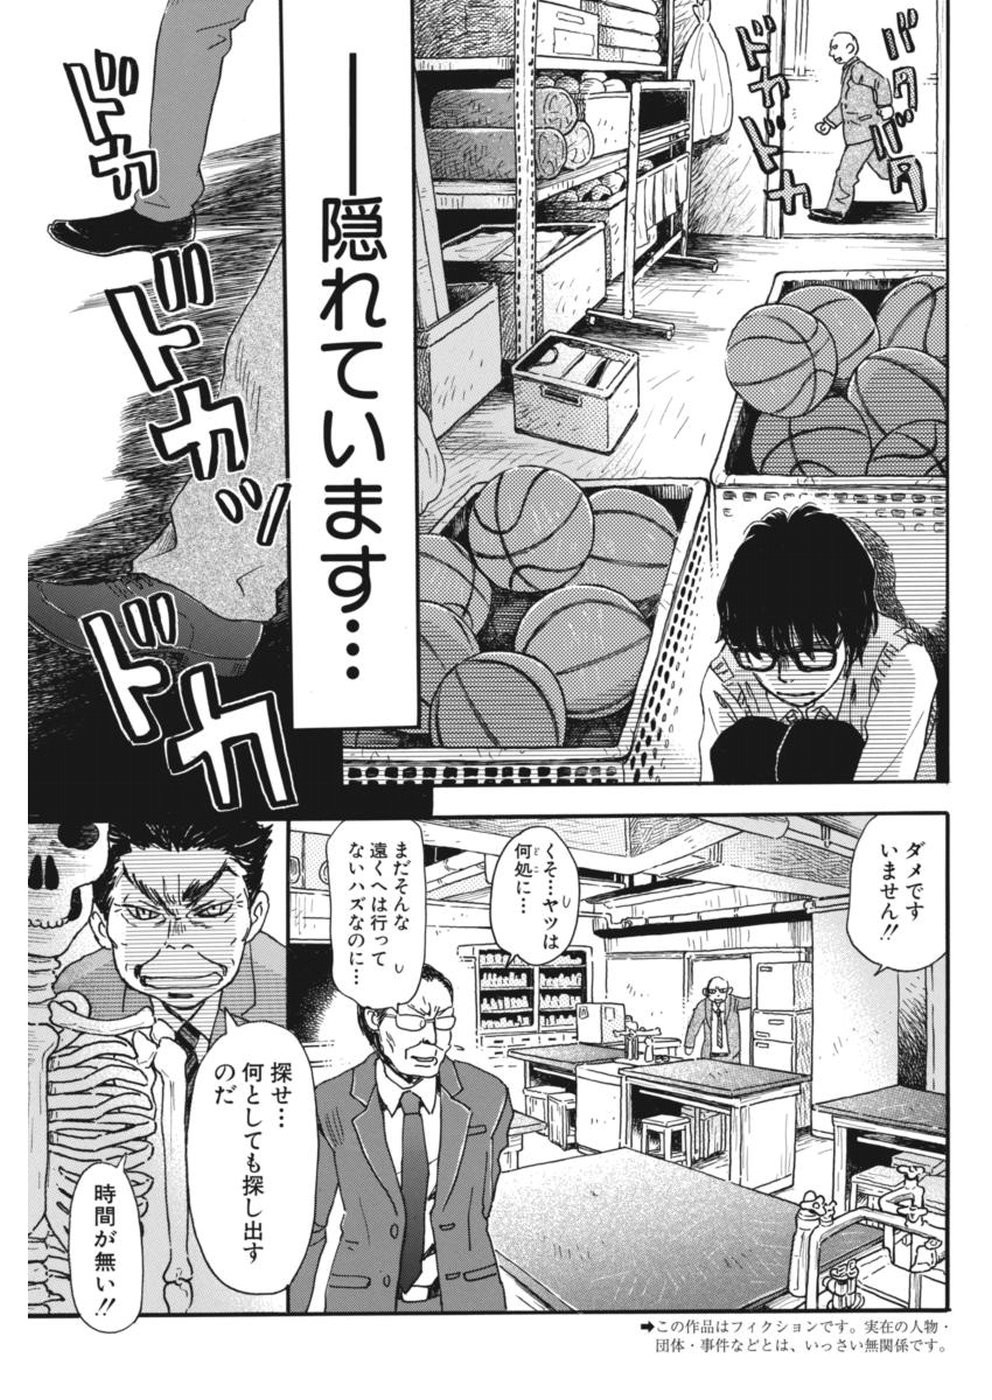 3 Gatsu no Lion - Chapter 148 - Page 3